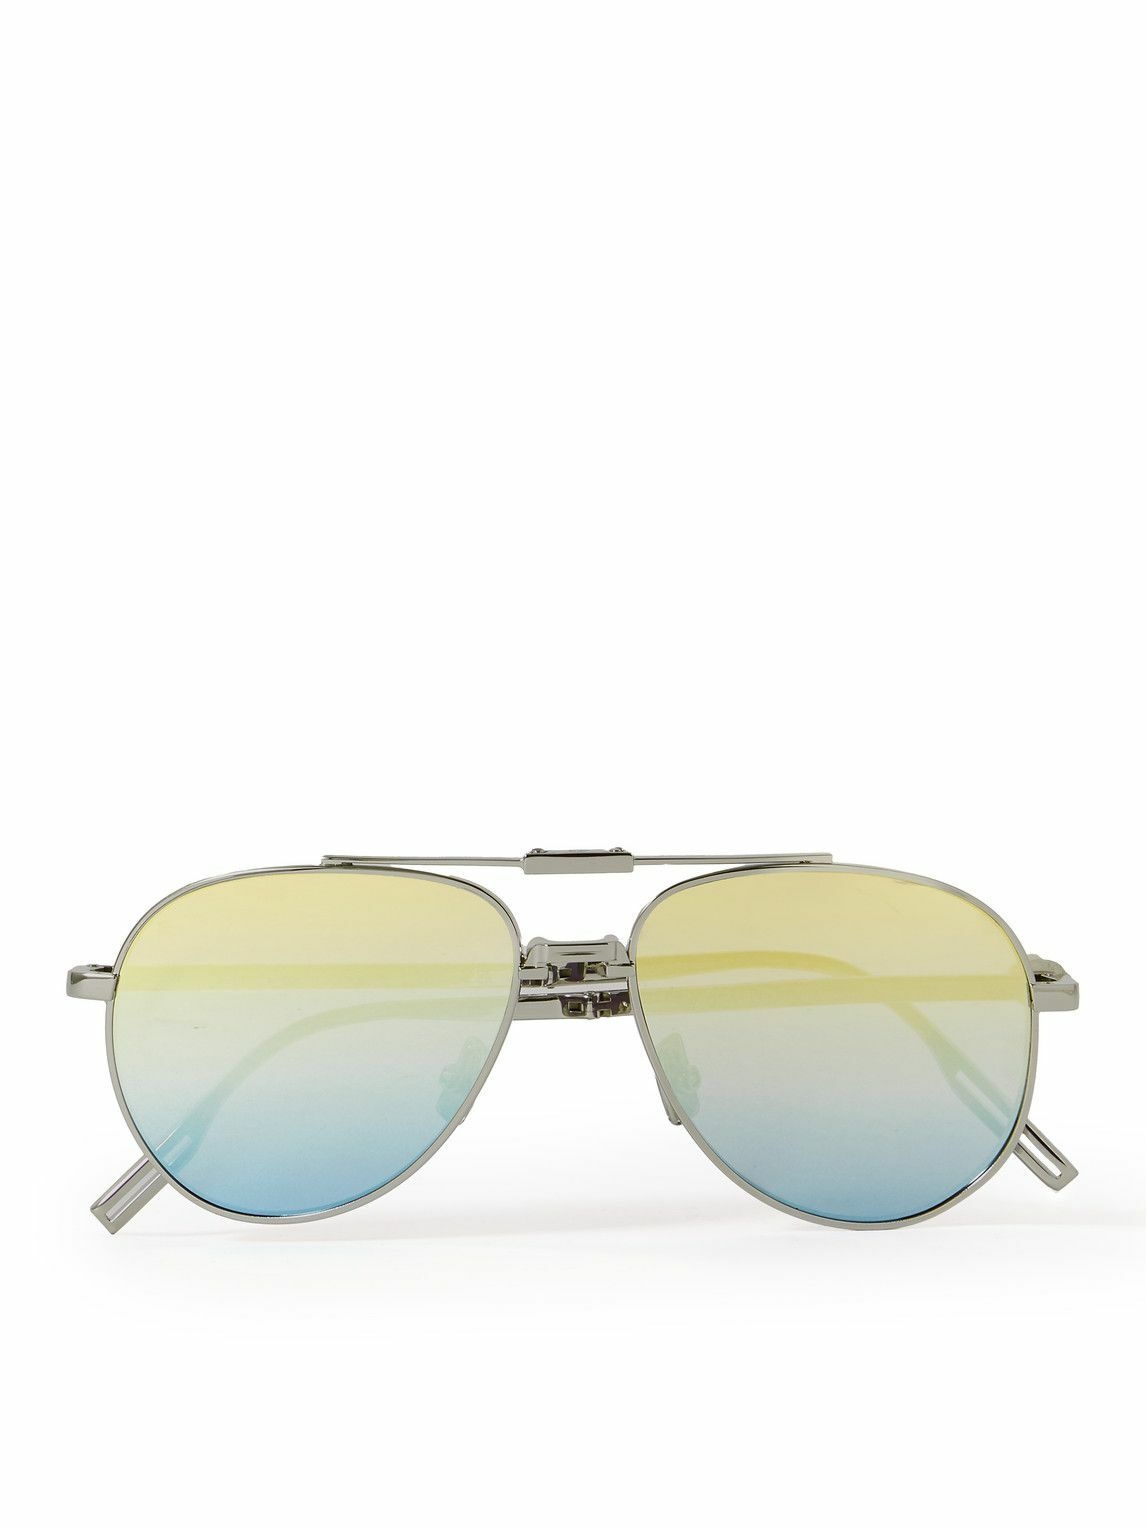 Dior Eyewear - Dior90 A1U Aviator-Style Silver-Tone Sunglasses Dior